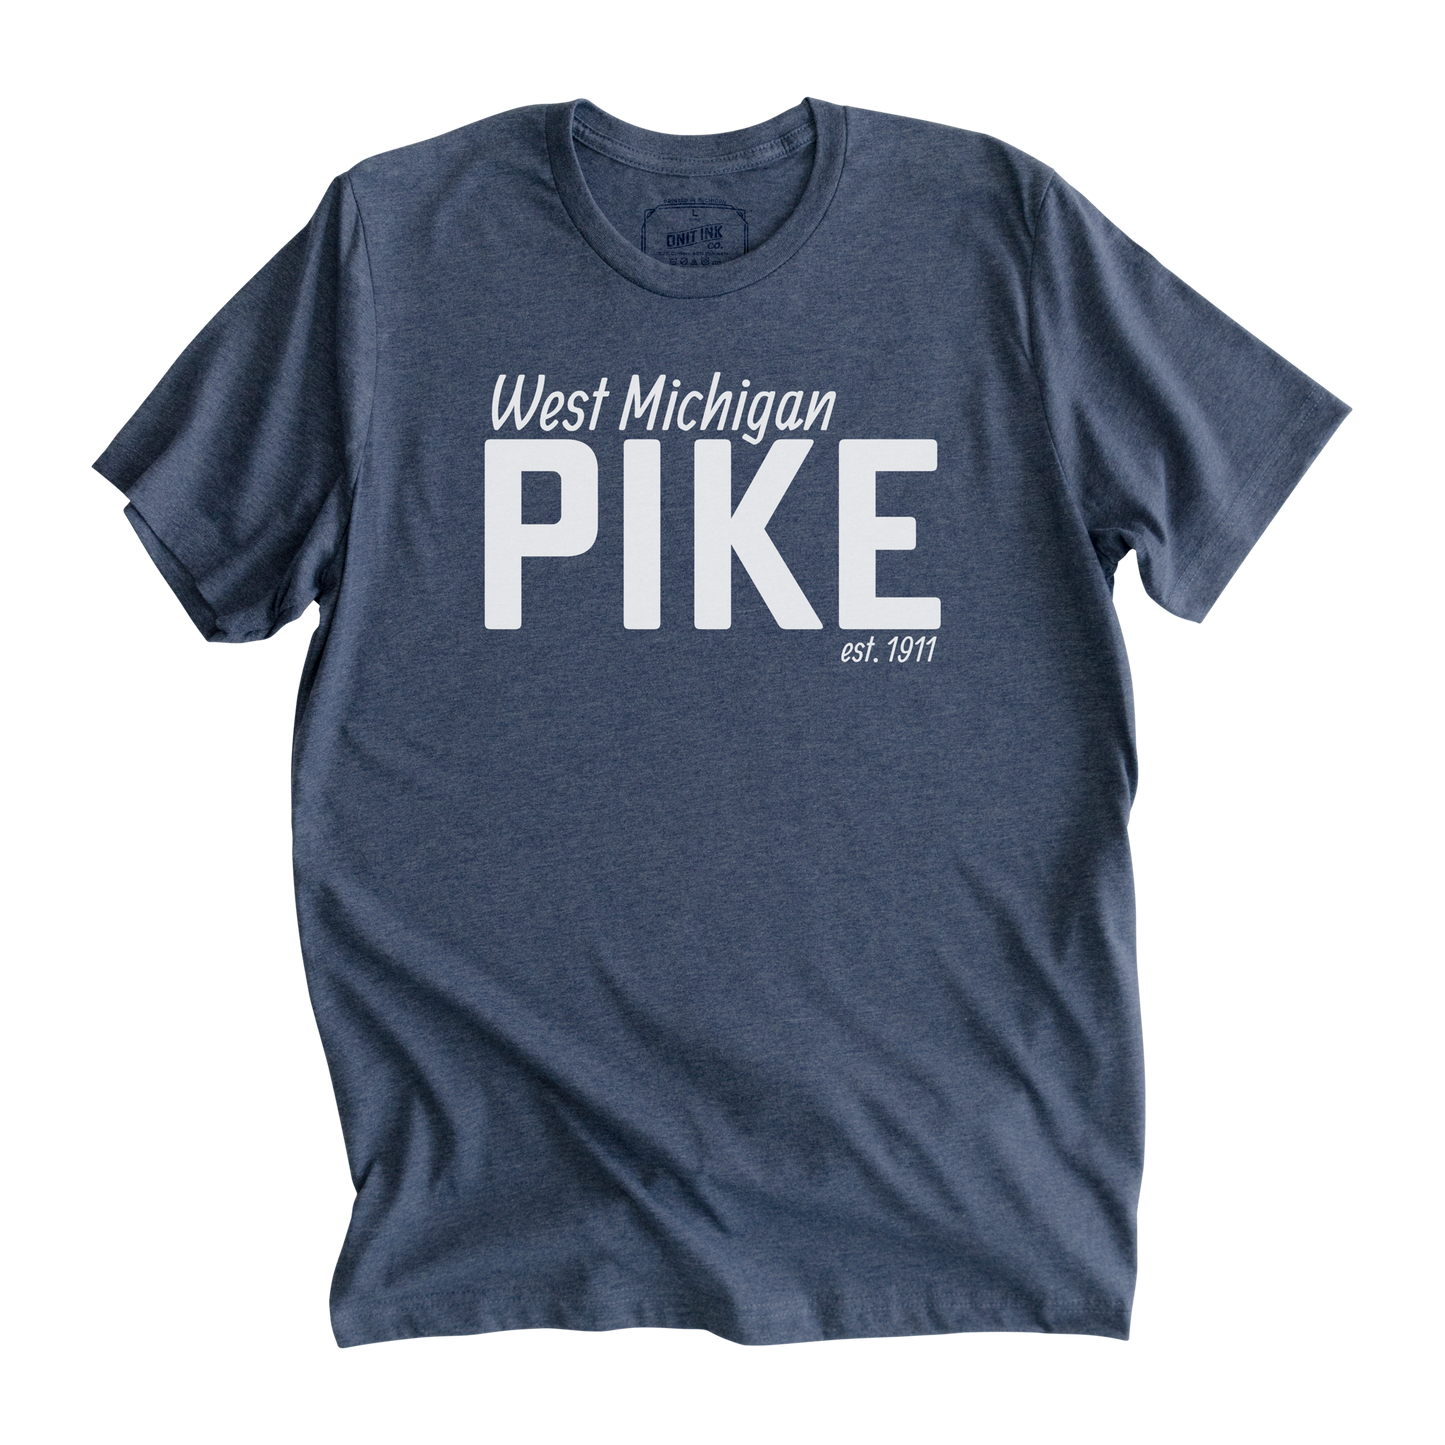 West Michigan Pike Est. 1911 T-Shirt